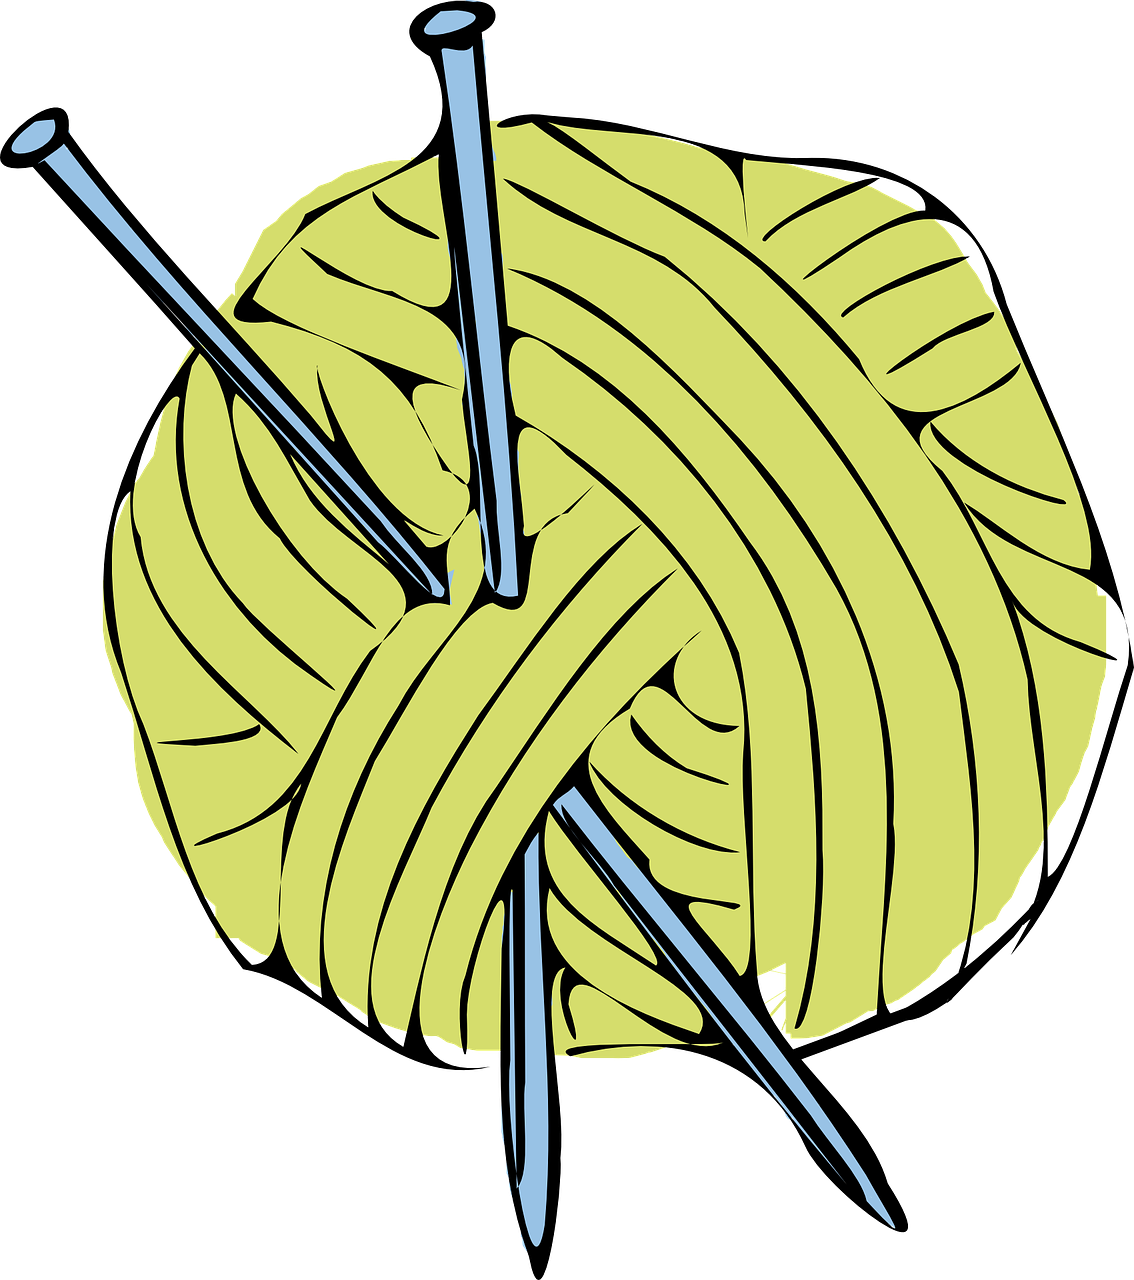 Yellow Yarn Ball With Knitting Needles PNG image